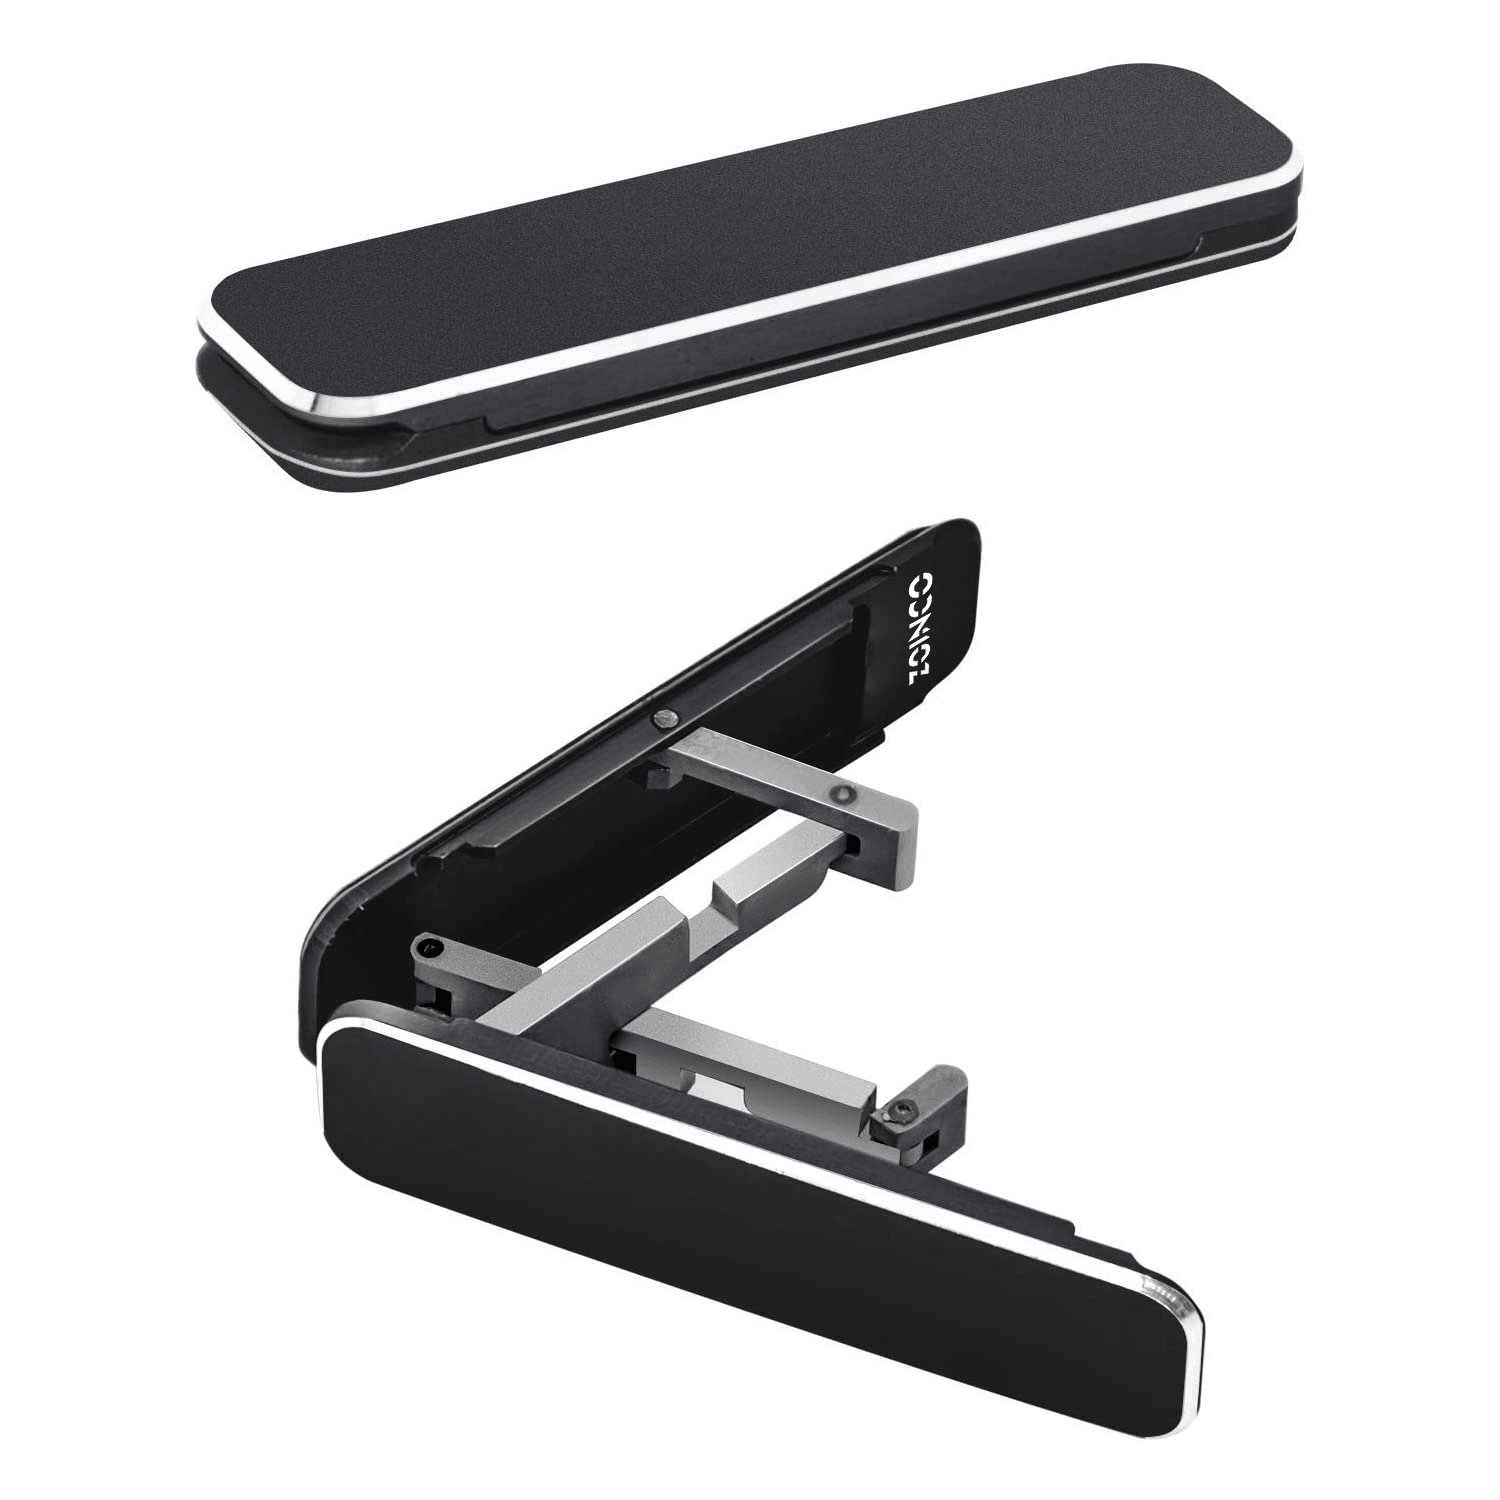 Phone Tablet Stand - Adjustable Aluminum Desktop Phone Stand - Phone Holder